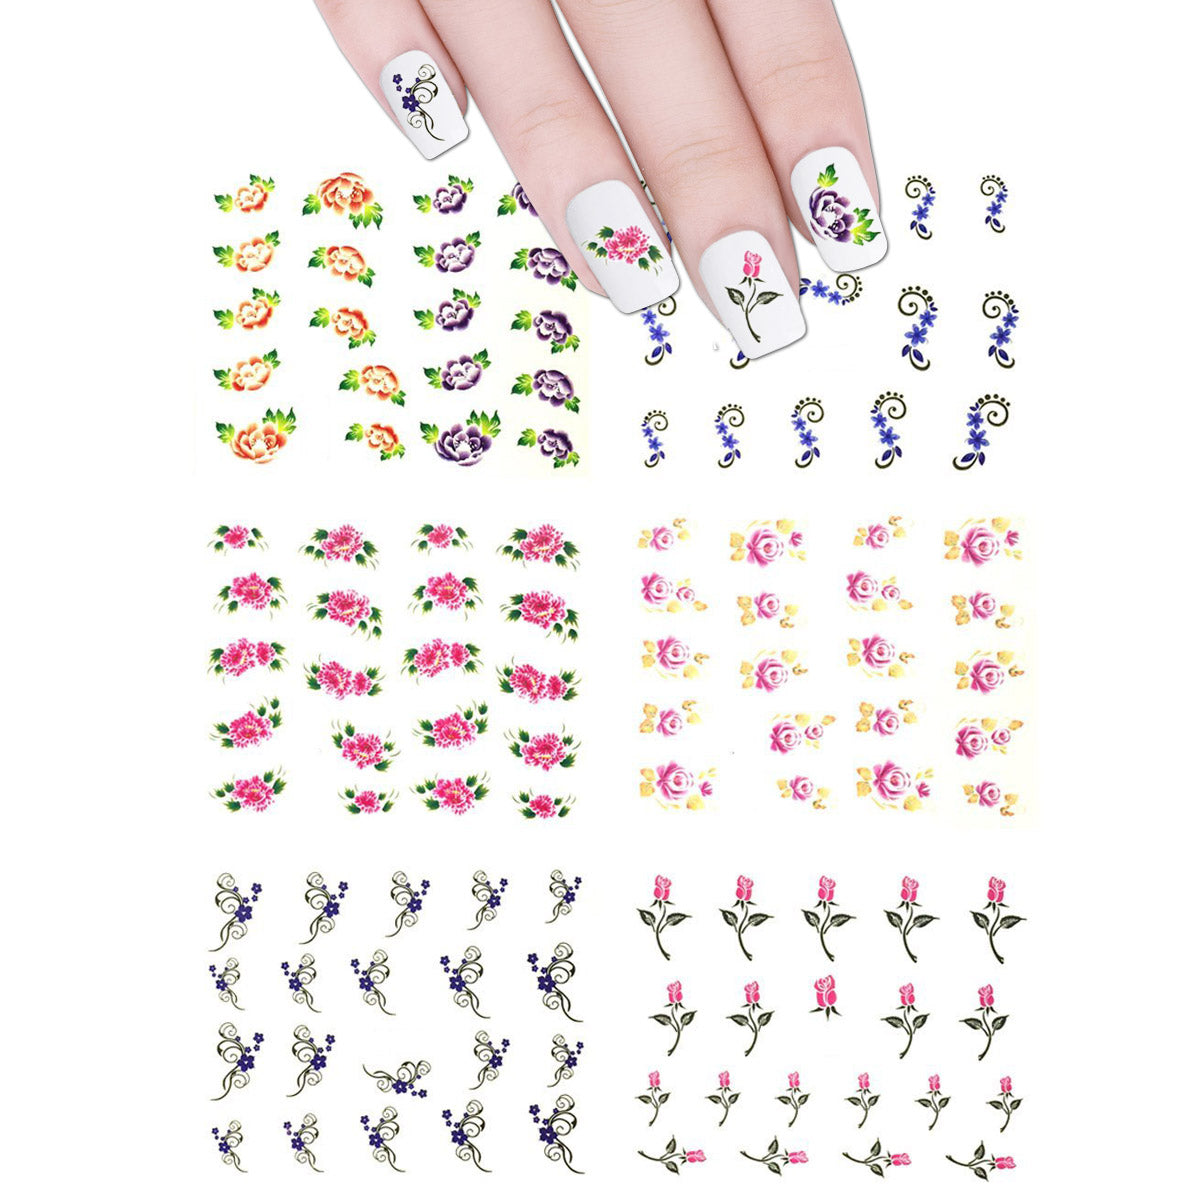 Wrapables Nail Art Water Nail Stickers Water Transfer Stickers / Nail Art Tattoos / Nail Art Decals, Floral (6 sheets)